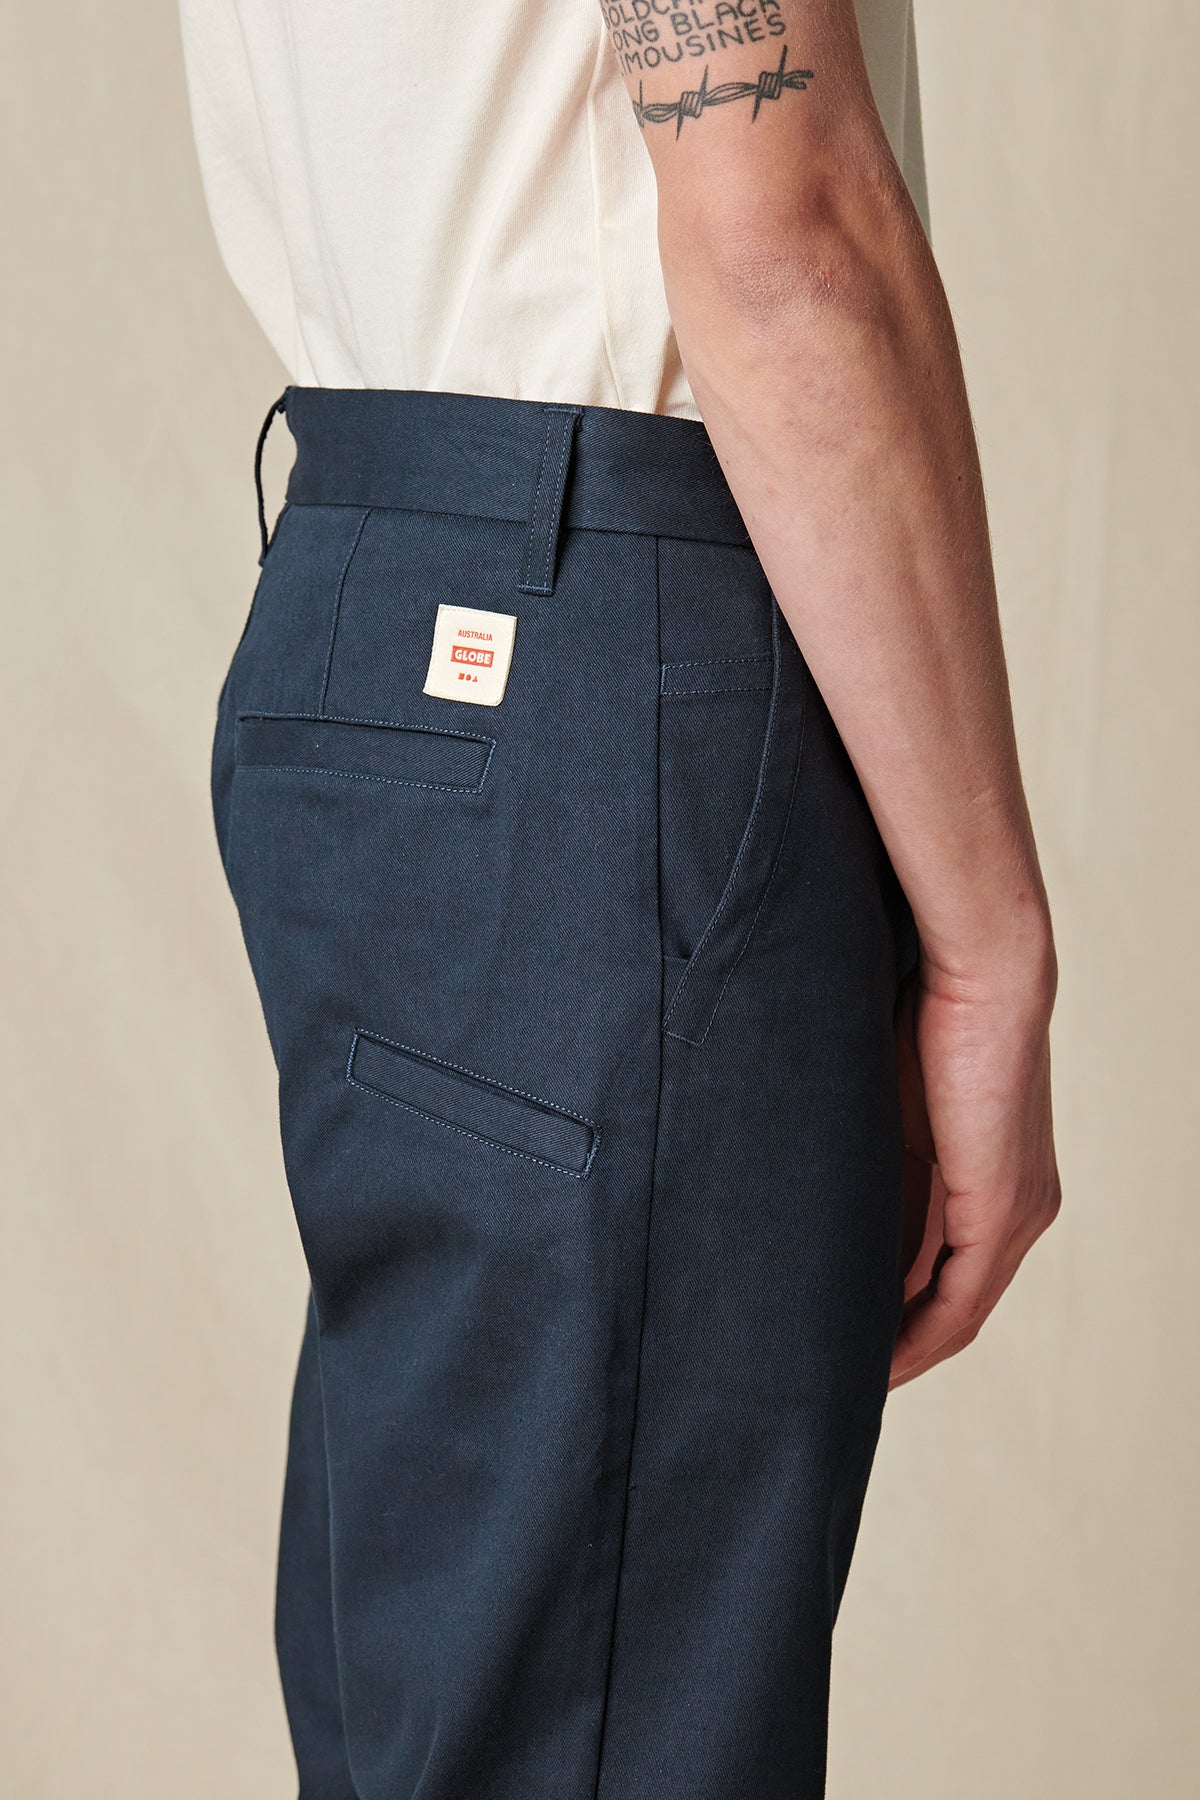 back pocket detail of Navy Globe Pants. 